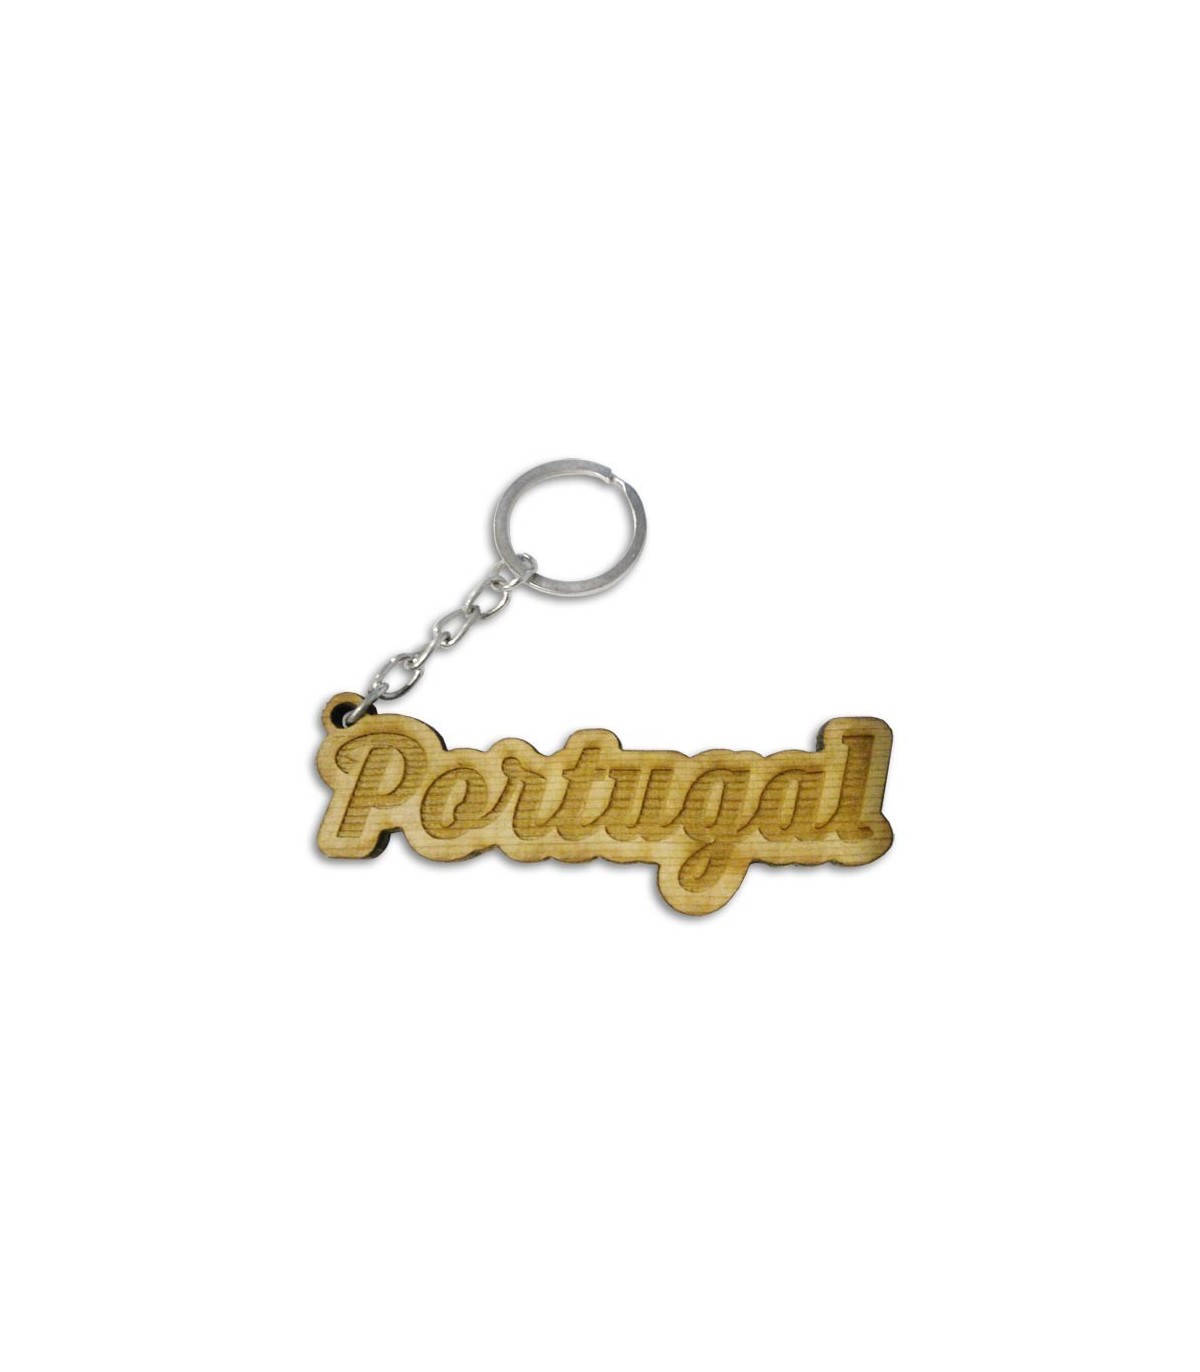 Portwood PC007 Portugal, Porta chaves